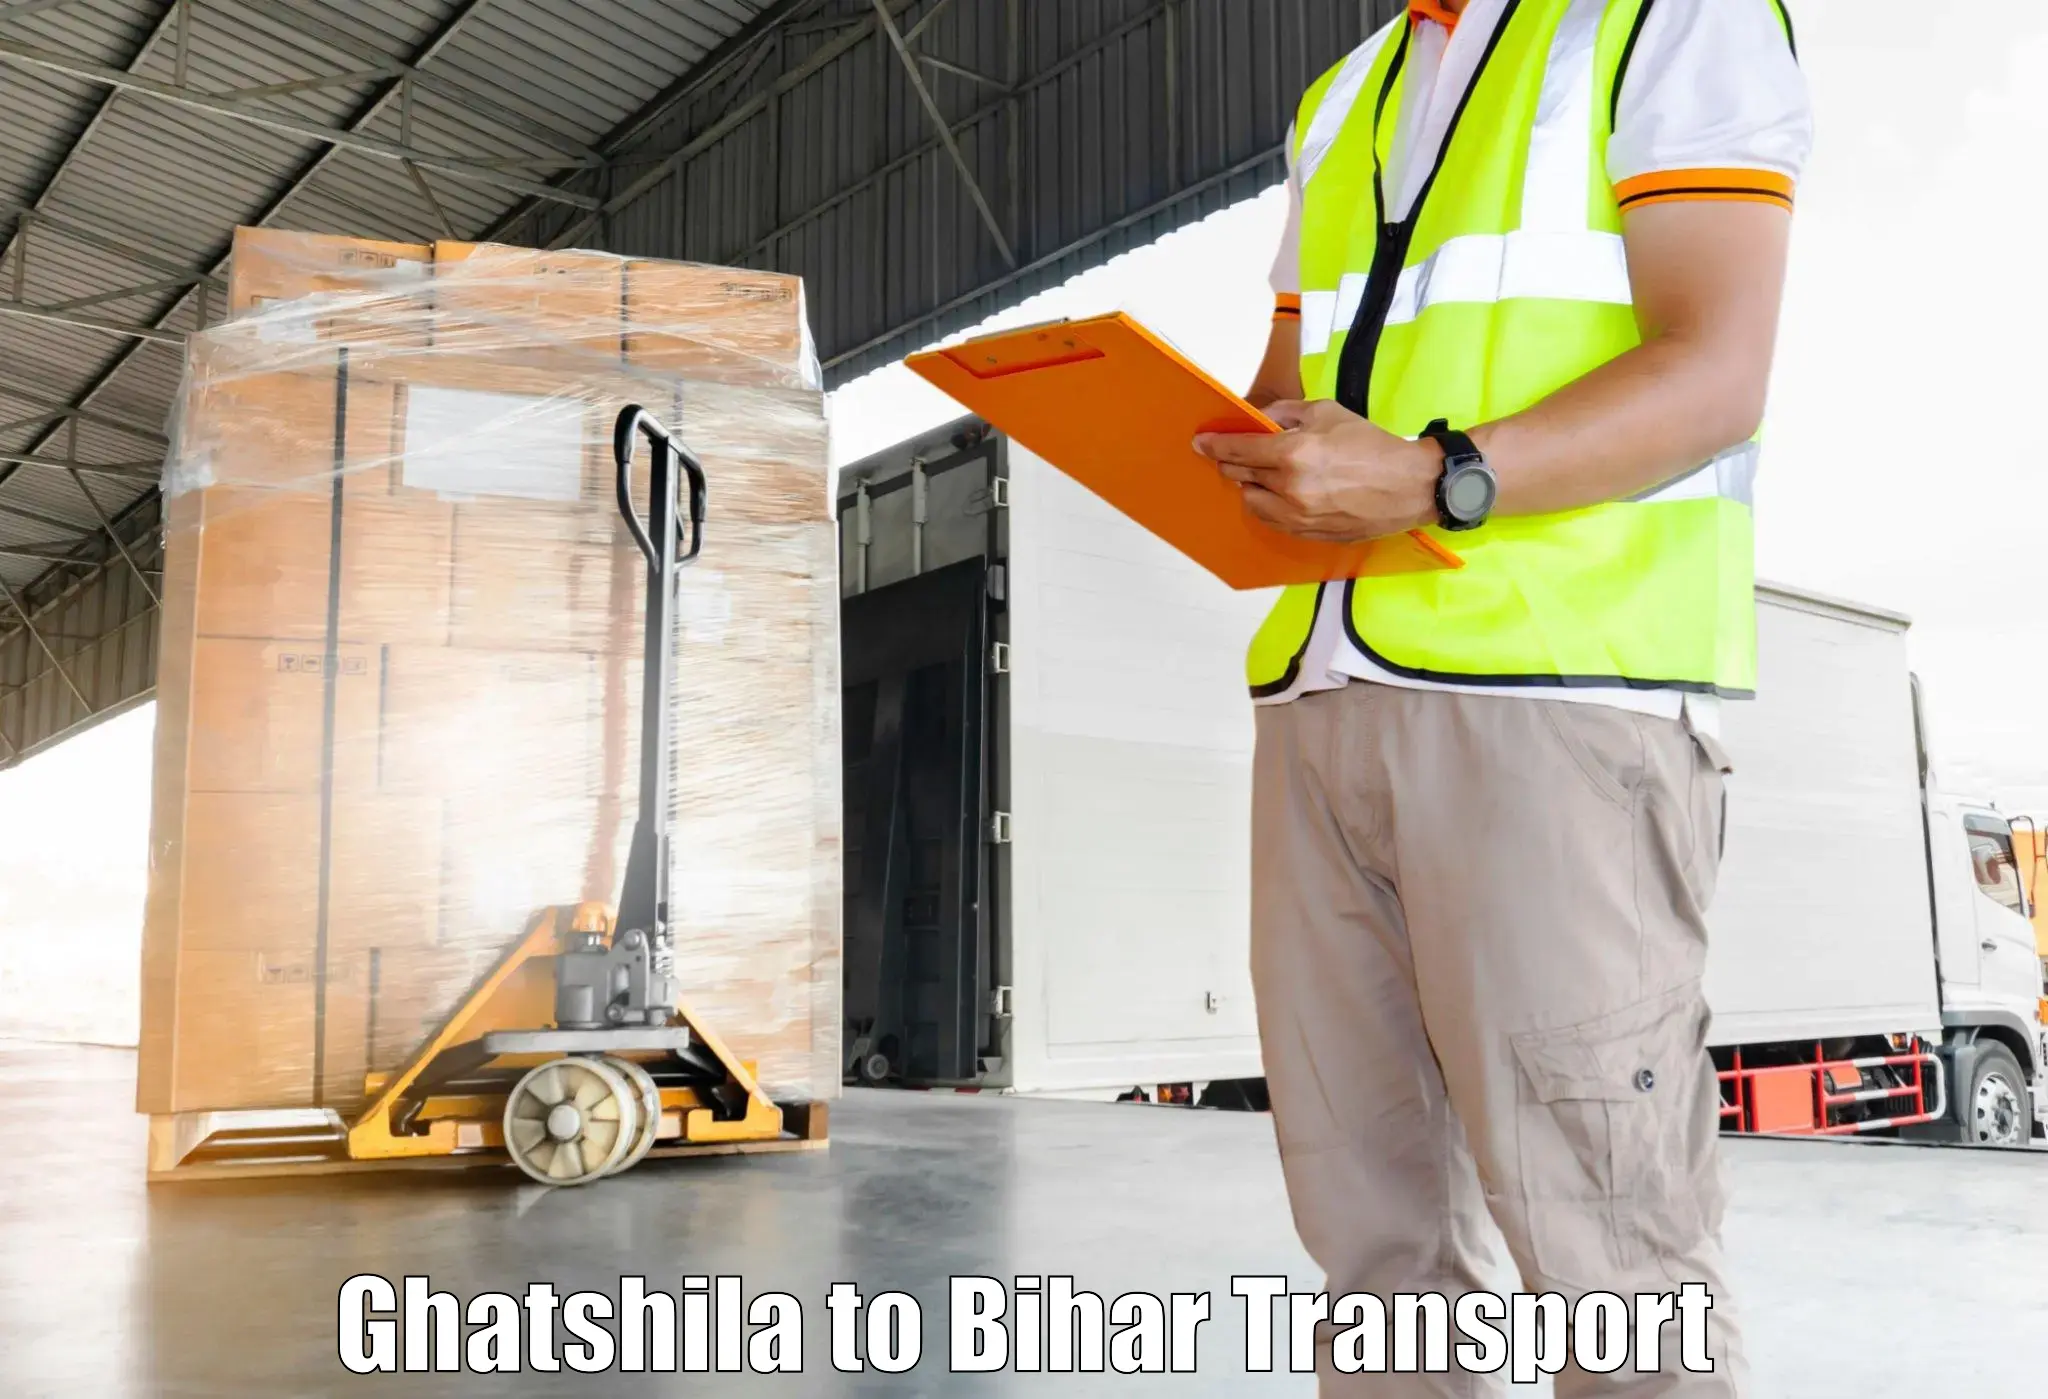 Commercial transport service Ghatshila to Bankipore